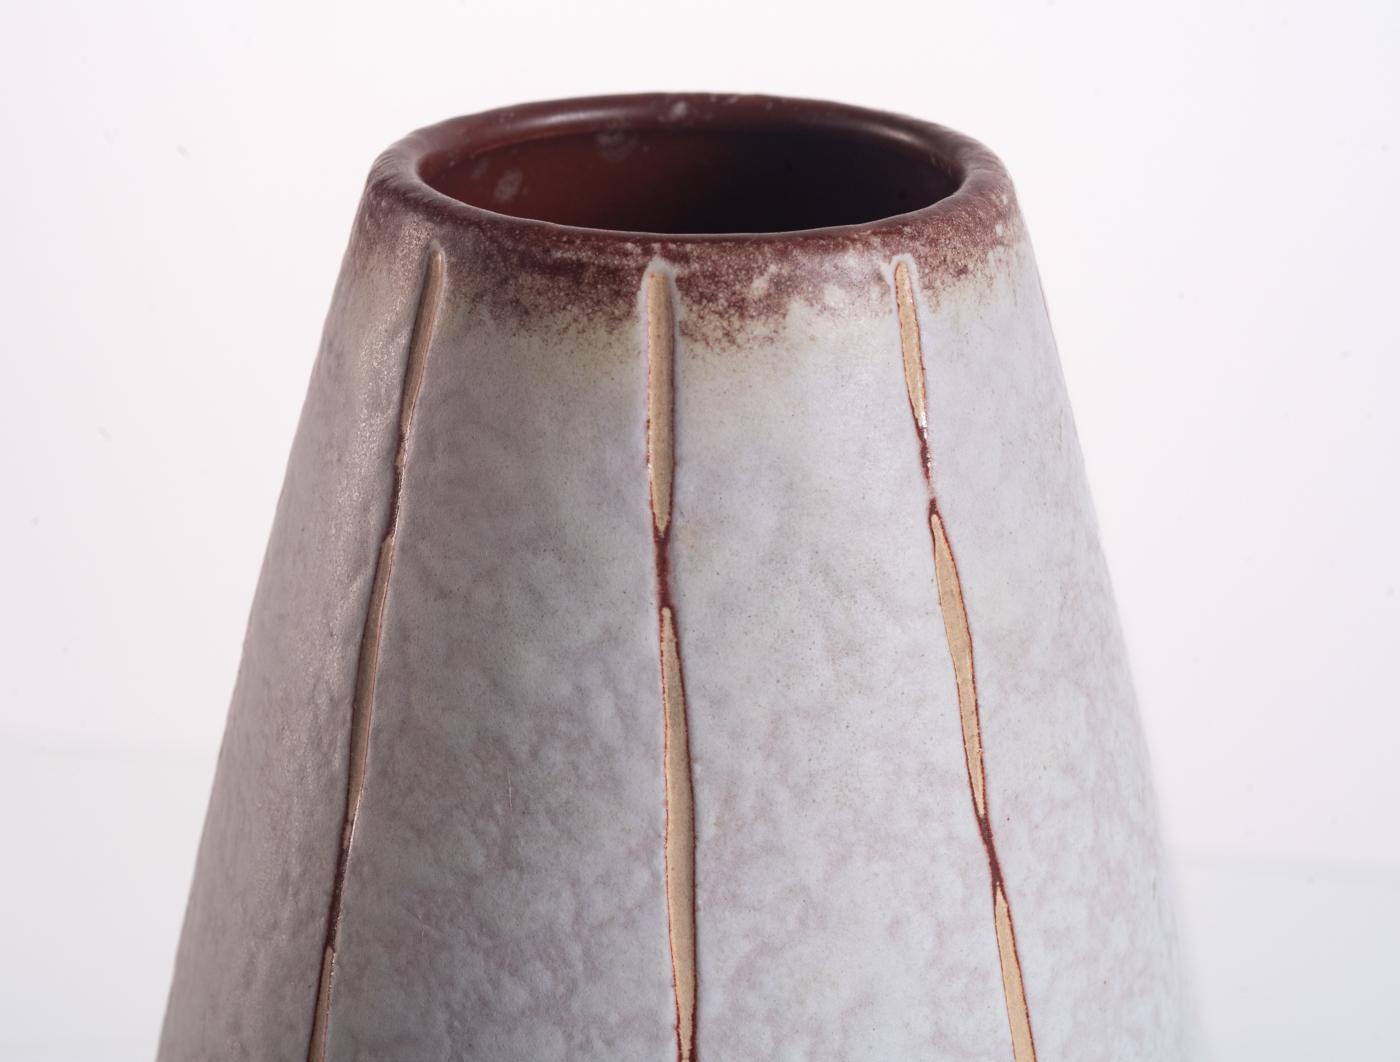 Cone Vase by U-Keramik (Uebelacker), Fat Lava, Mid-Century Modern c. 1950s For Sale 2